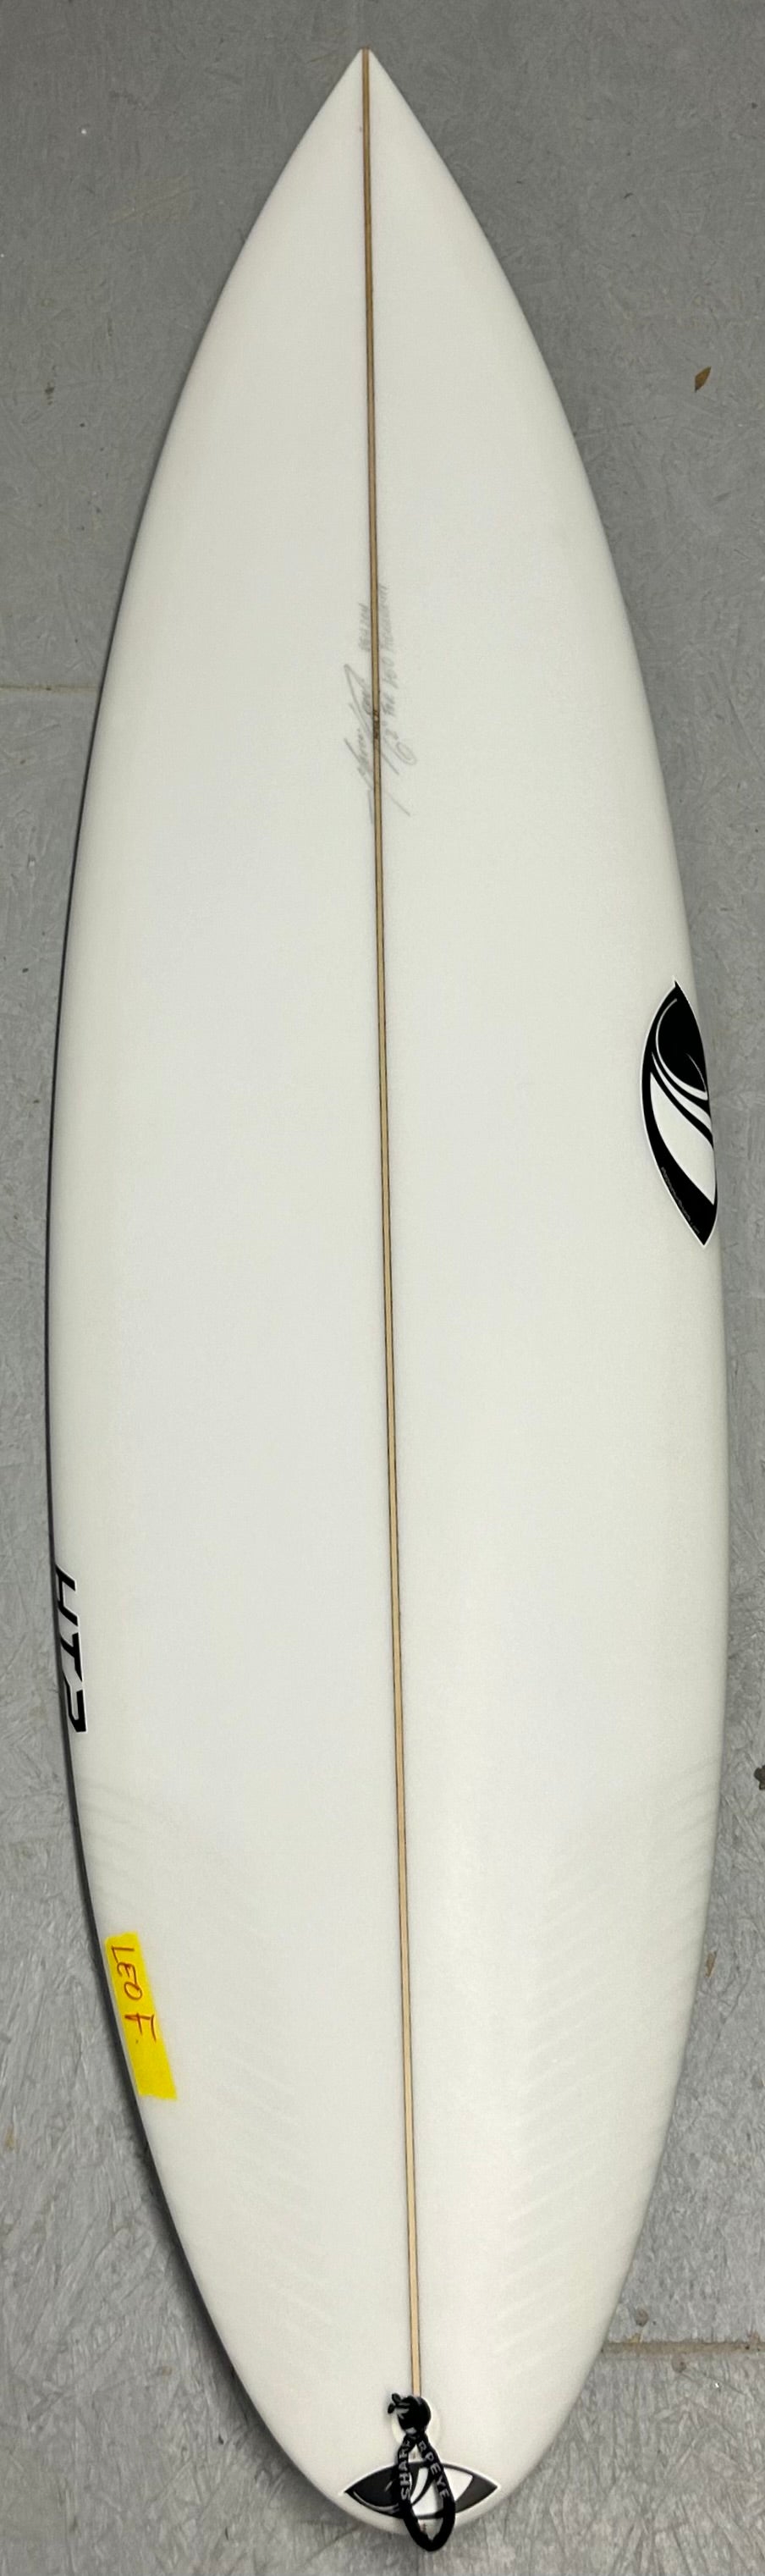 Used Surfboards – Sharp Eye Surfboards